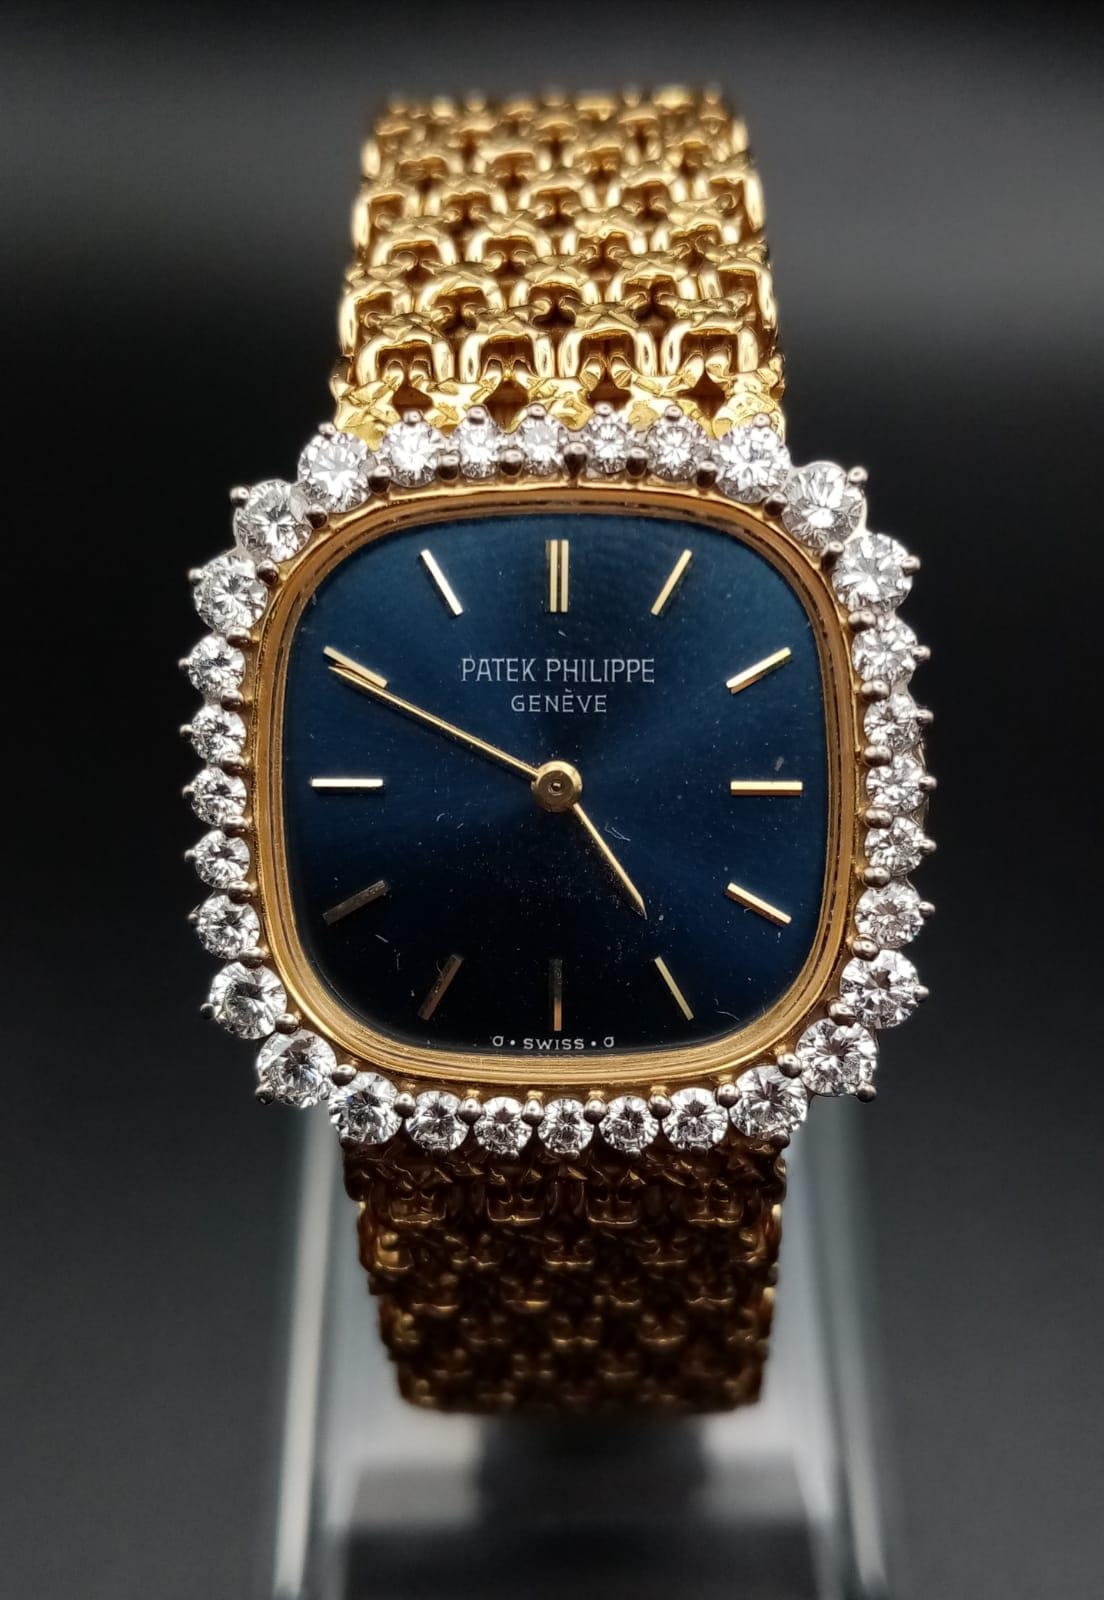 A Patek Phillipe Classic 18K Gold and Diamond Ladies Watch. Woven gold bracelet. Gold case - 24mm.